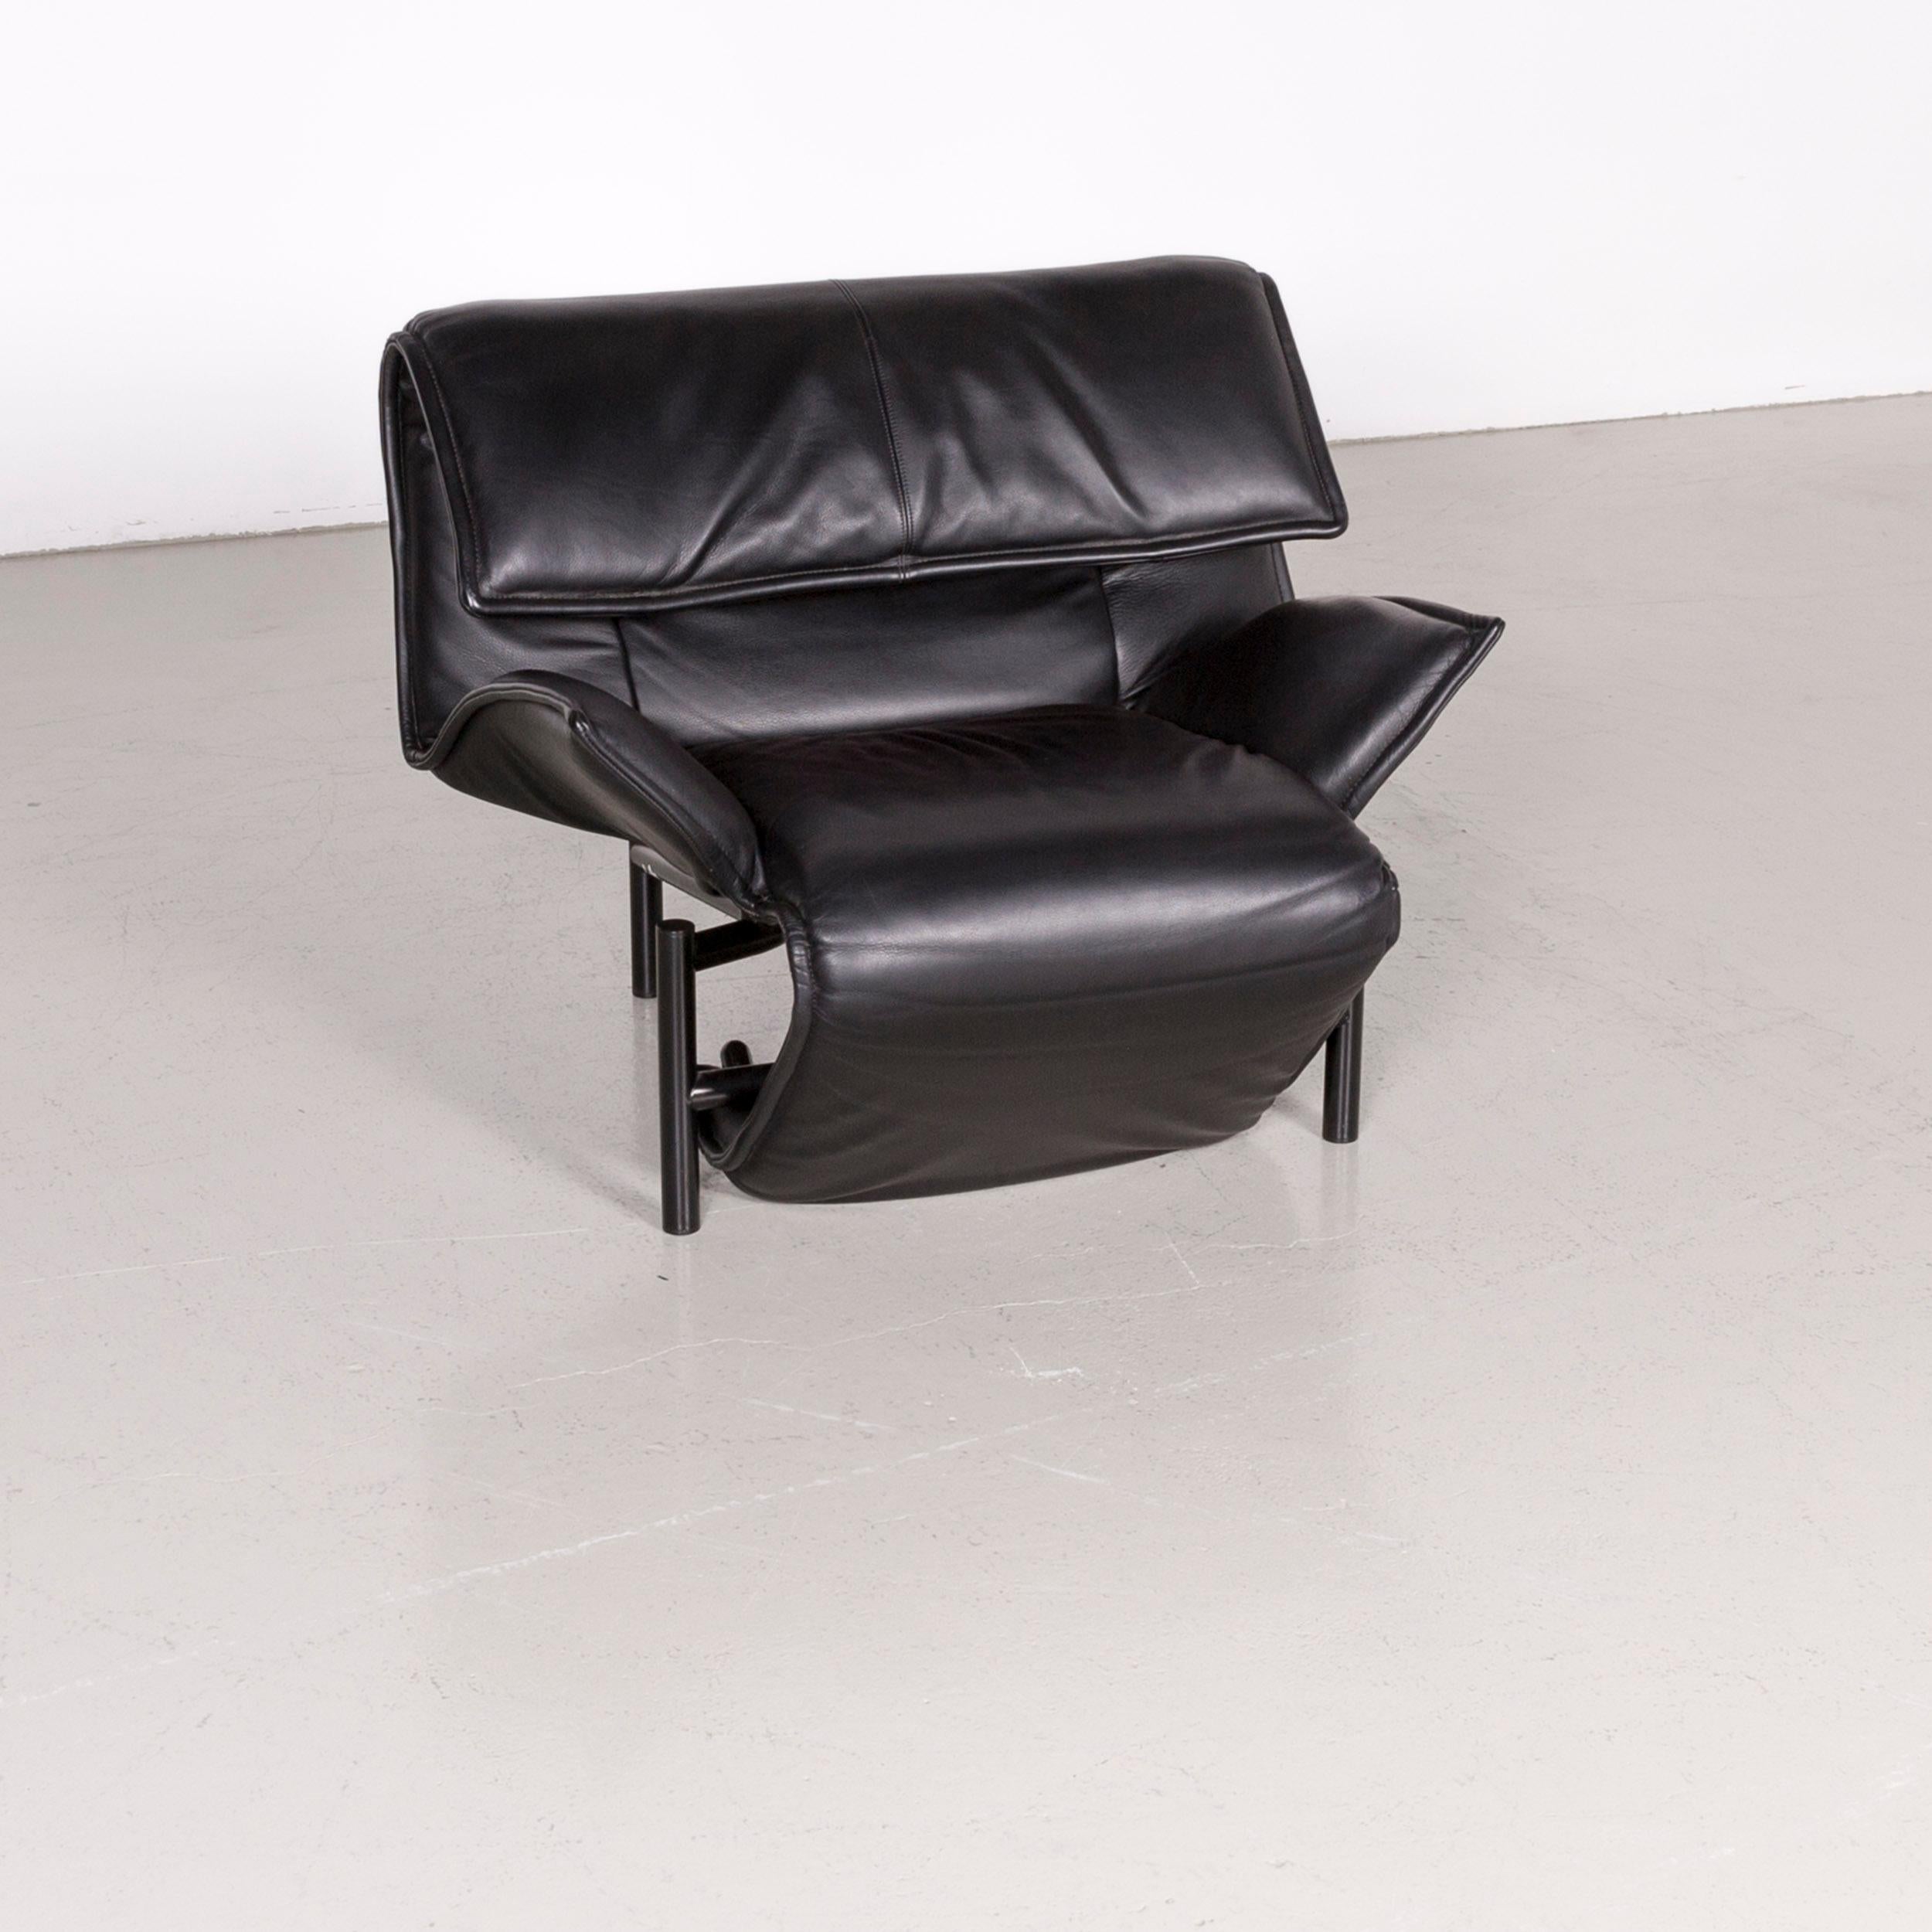 Cassina Veranda designer leather armchair in black recliner function.